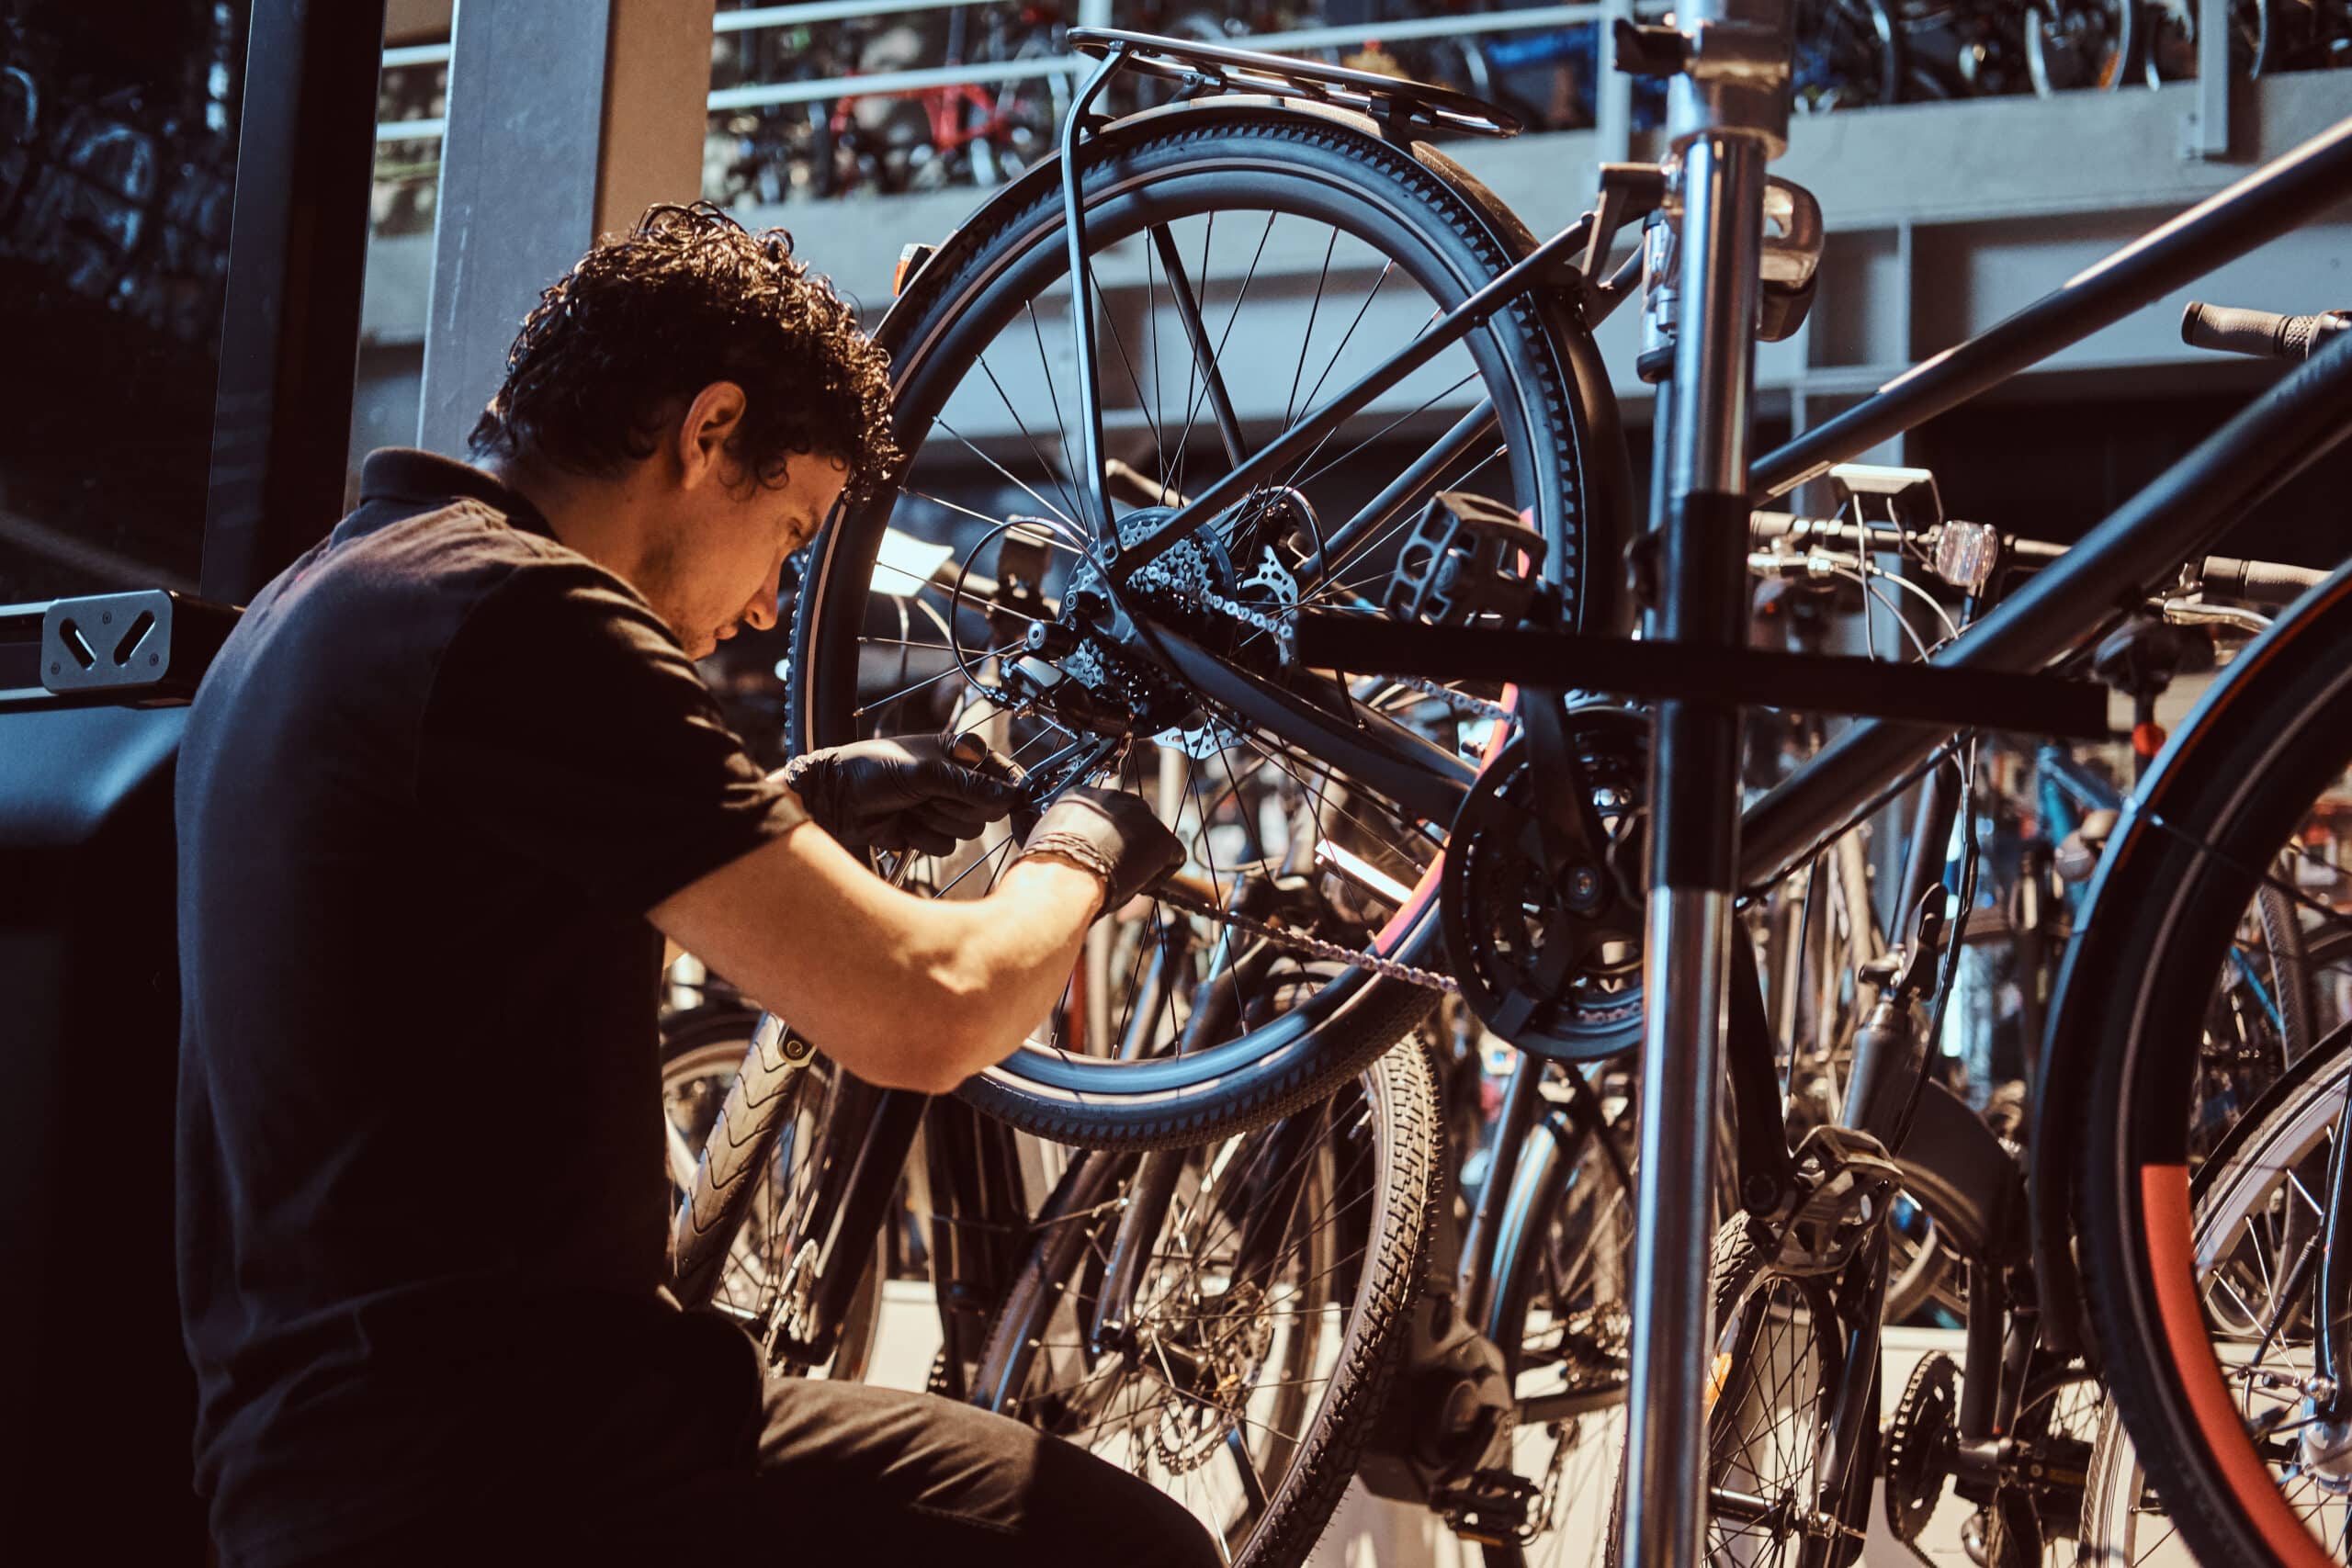 Bike Maintenance in a Bike Shop